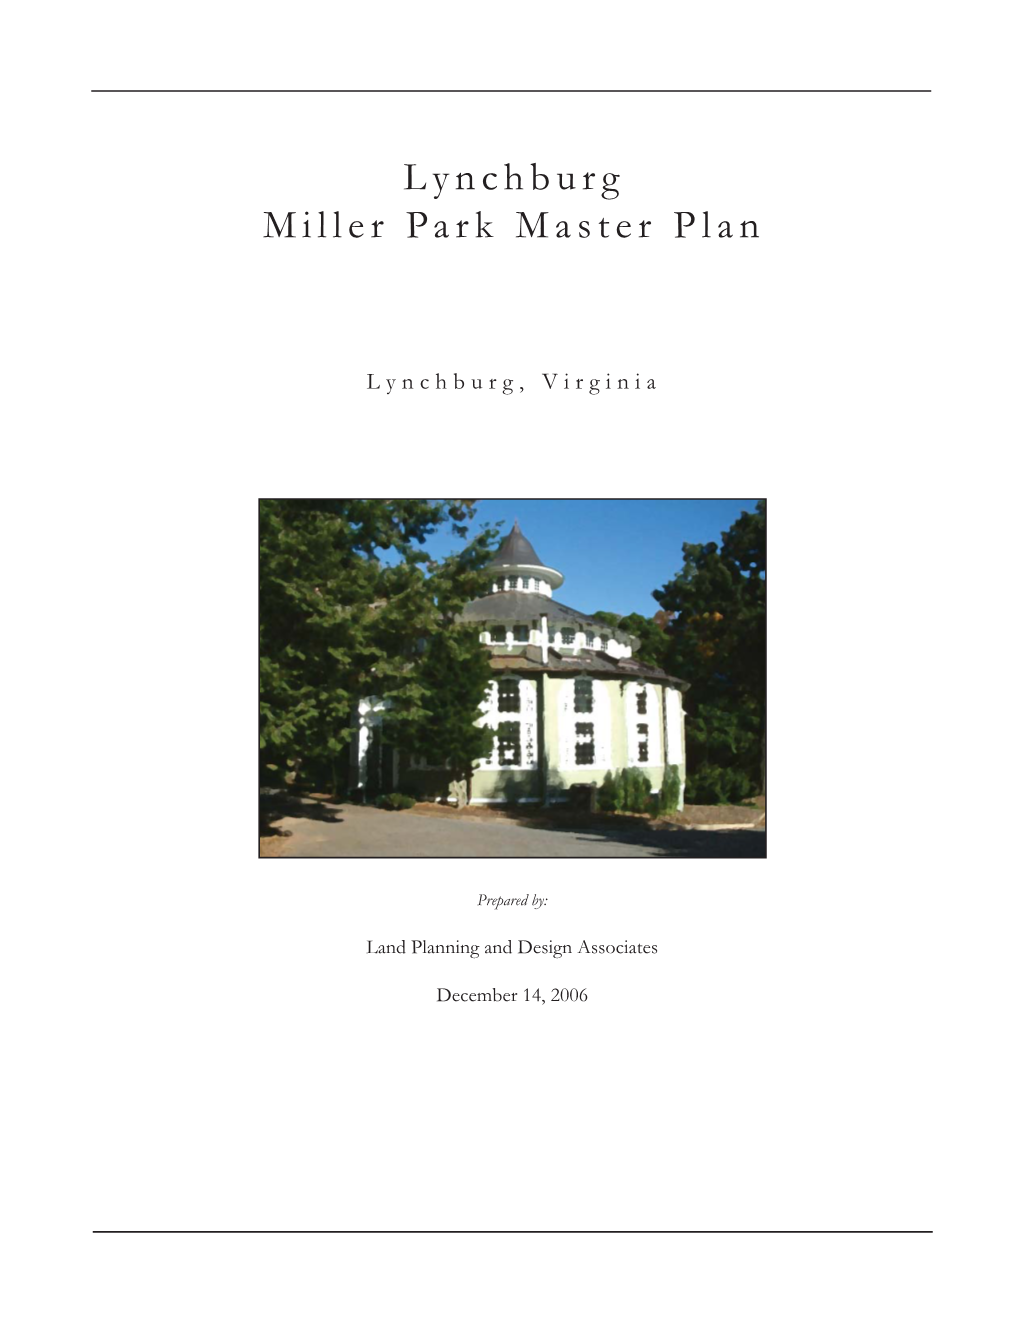 Miller Park Master Plan